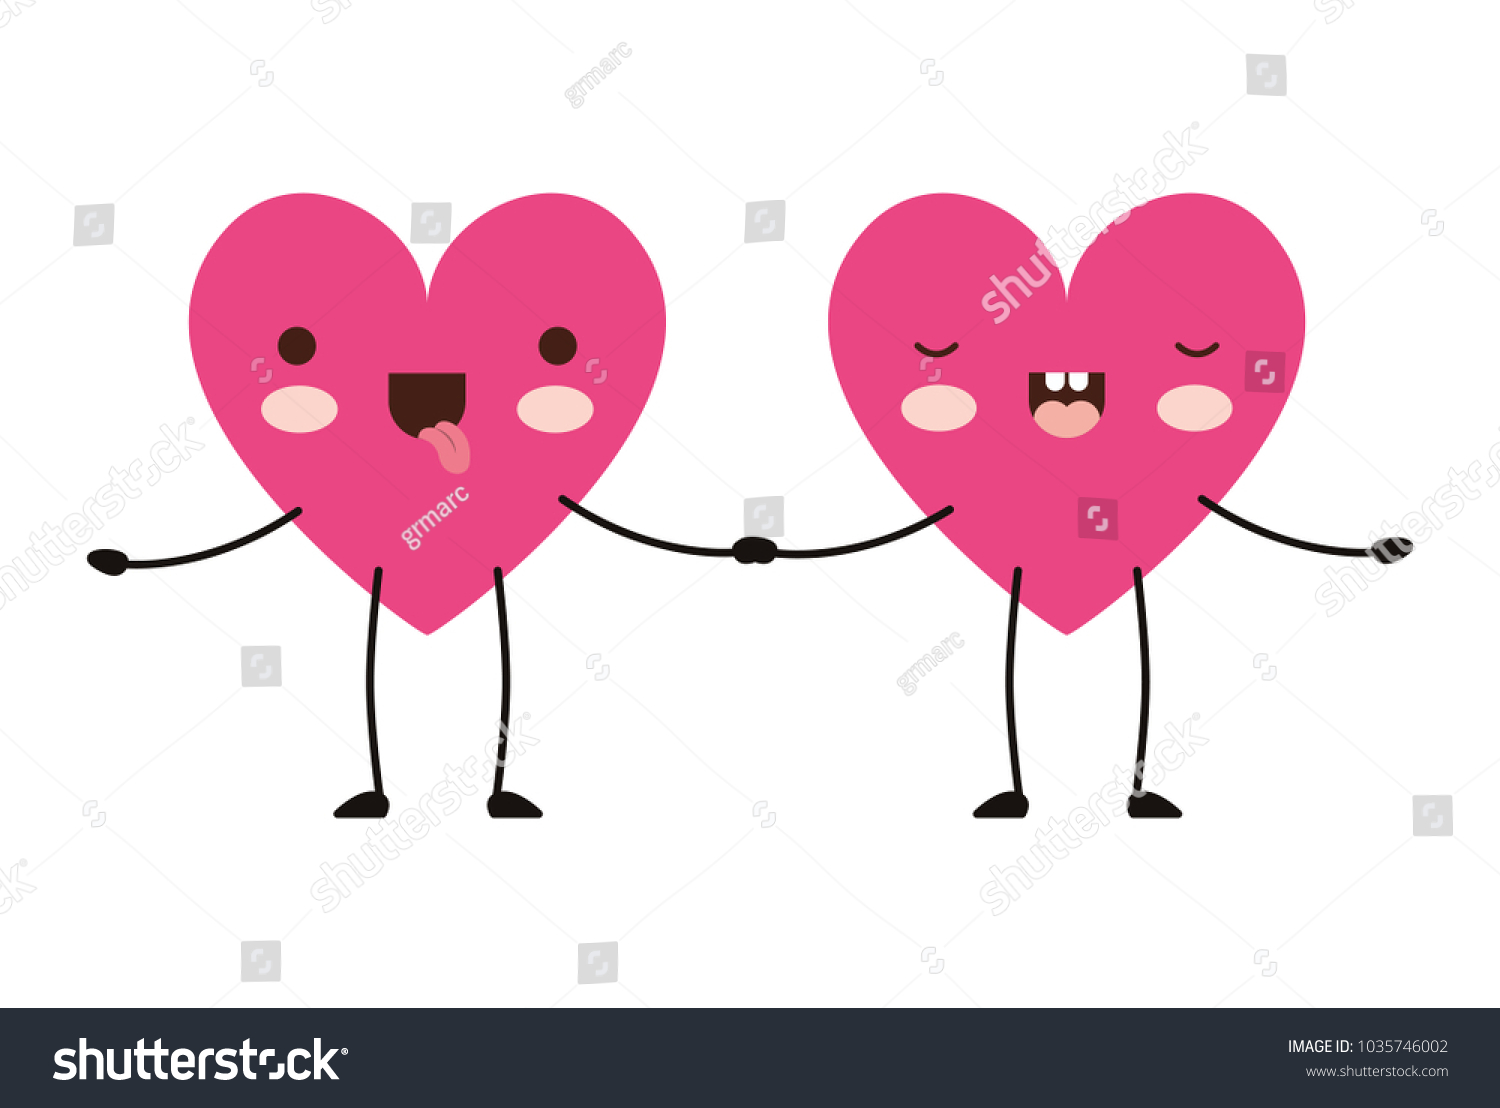 Cute Hearts Love Couple Kawaii Characters Image Vectorielle De Stock Libre De Droits